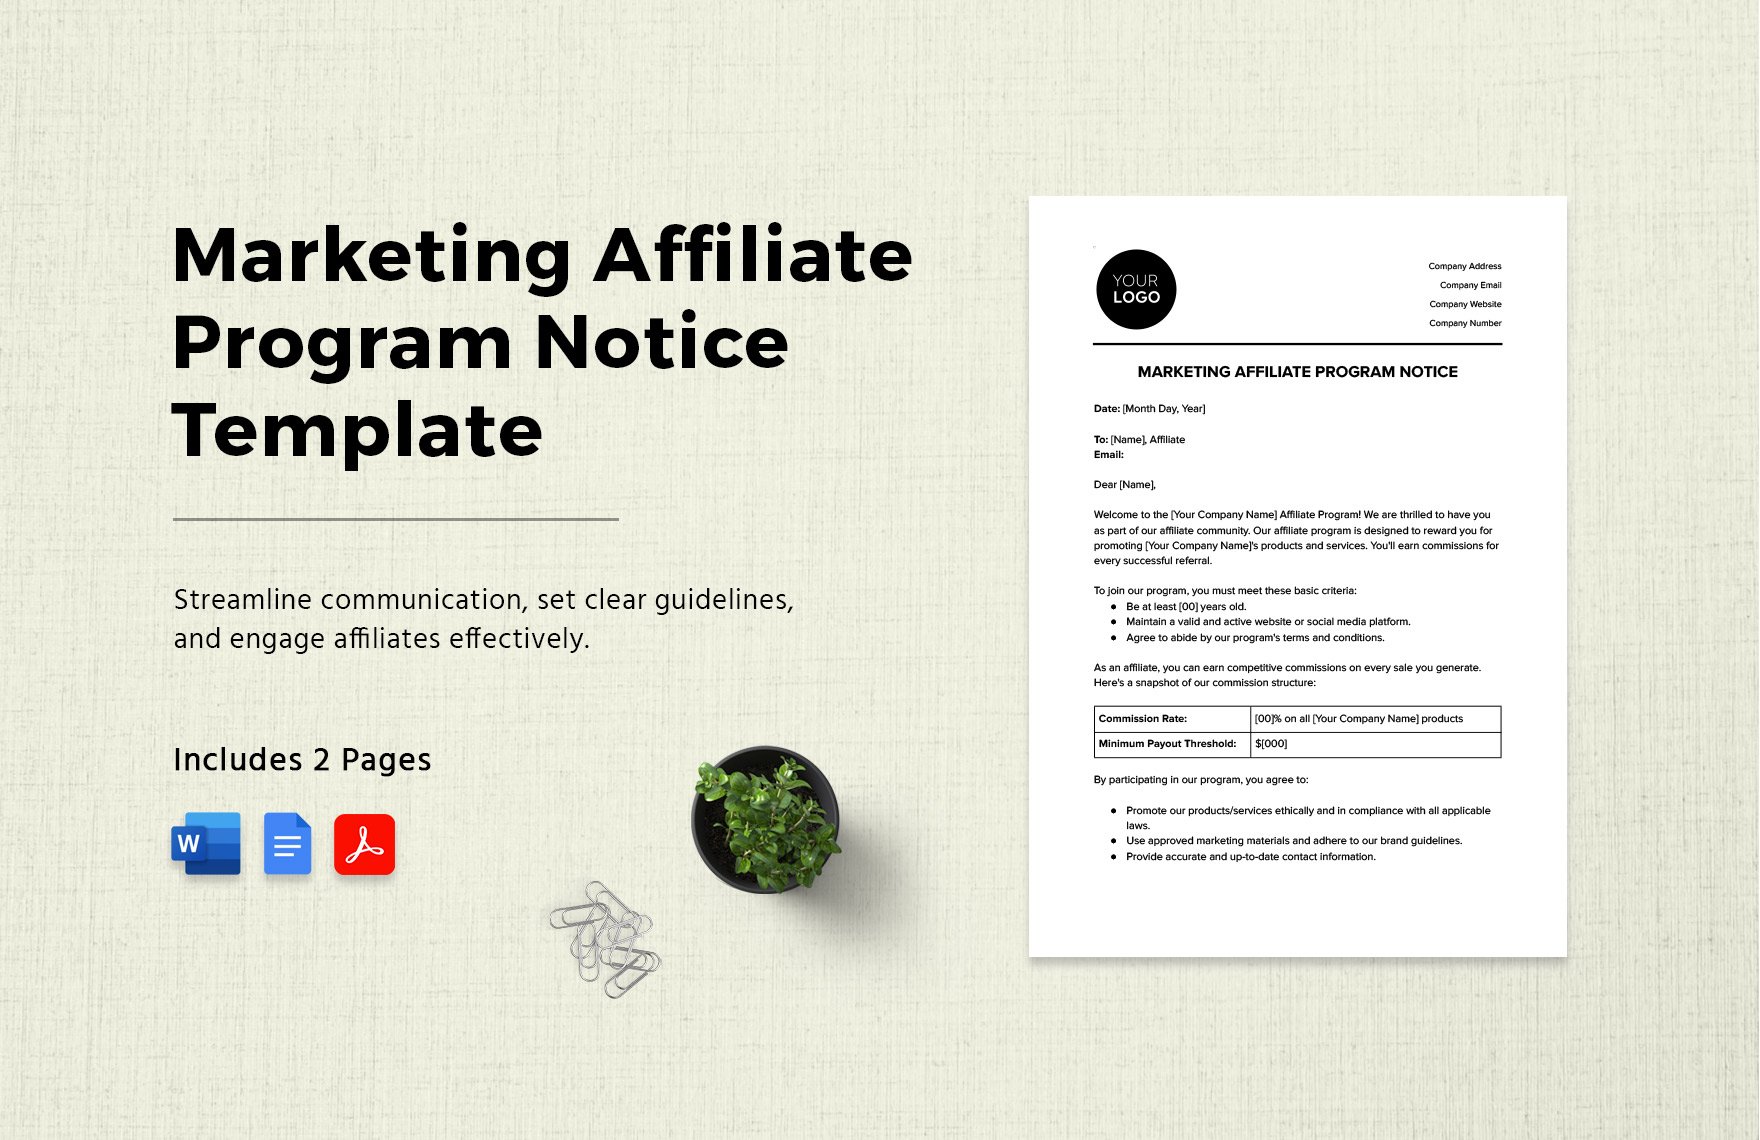 Marketing Affiliate Program Notice Template in Word, Google Docs, PDF